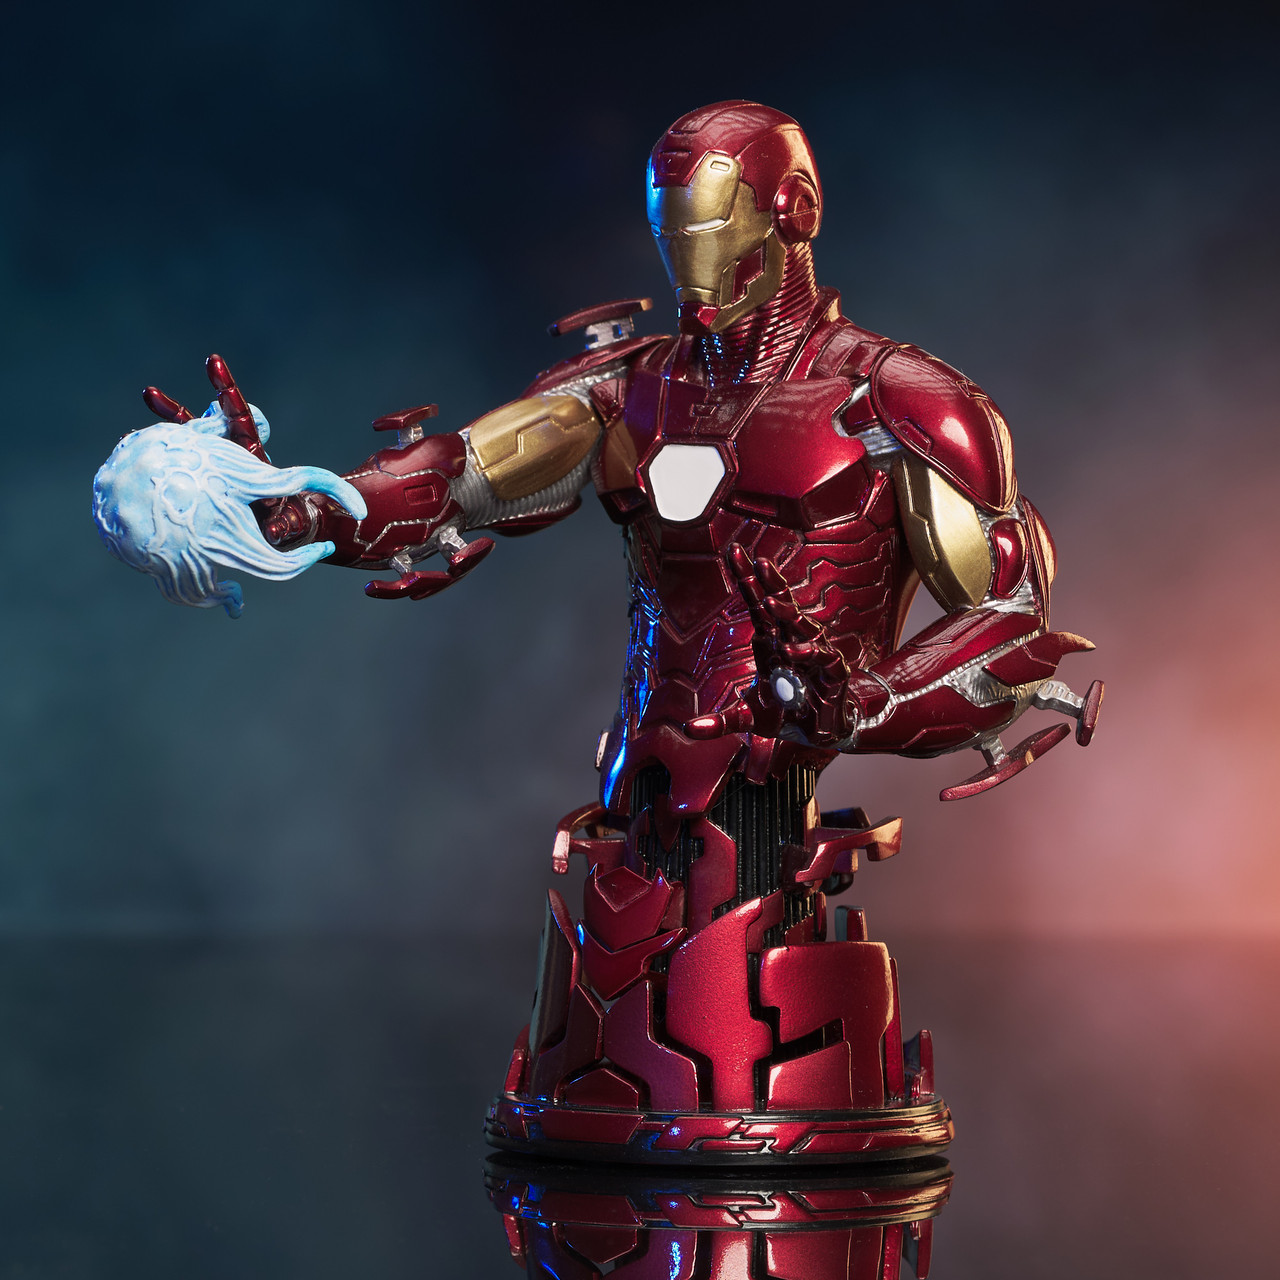 New Iron Man Mark85 Marvel Avengers Legends Comic Heroes Action Figure 7  Toys